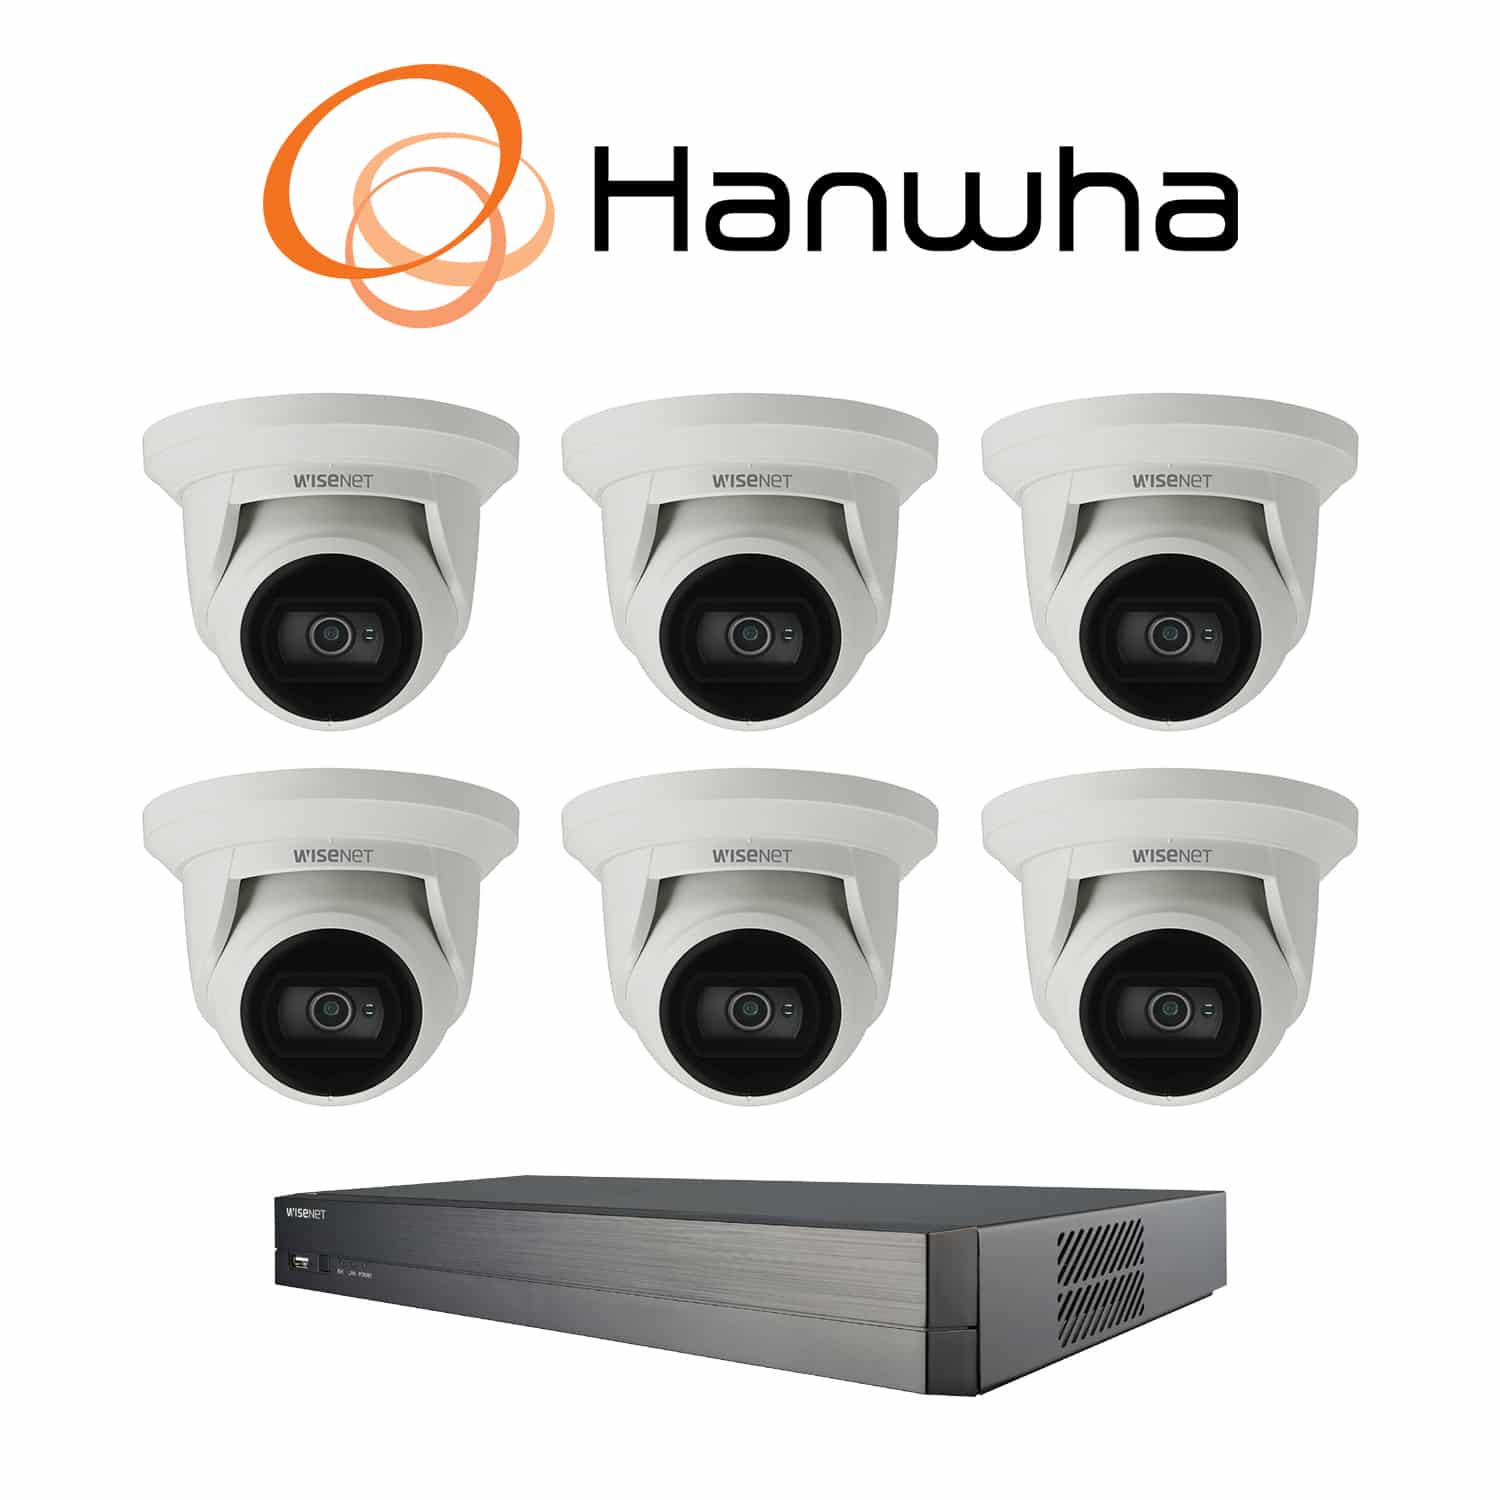 Hanwha 6 camera kit